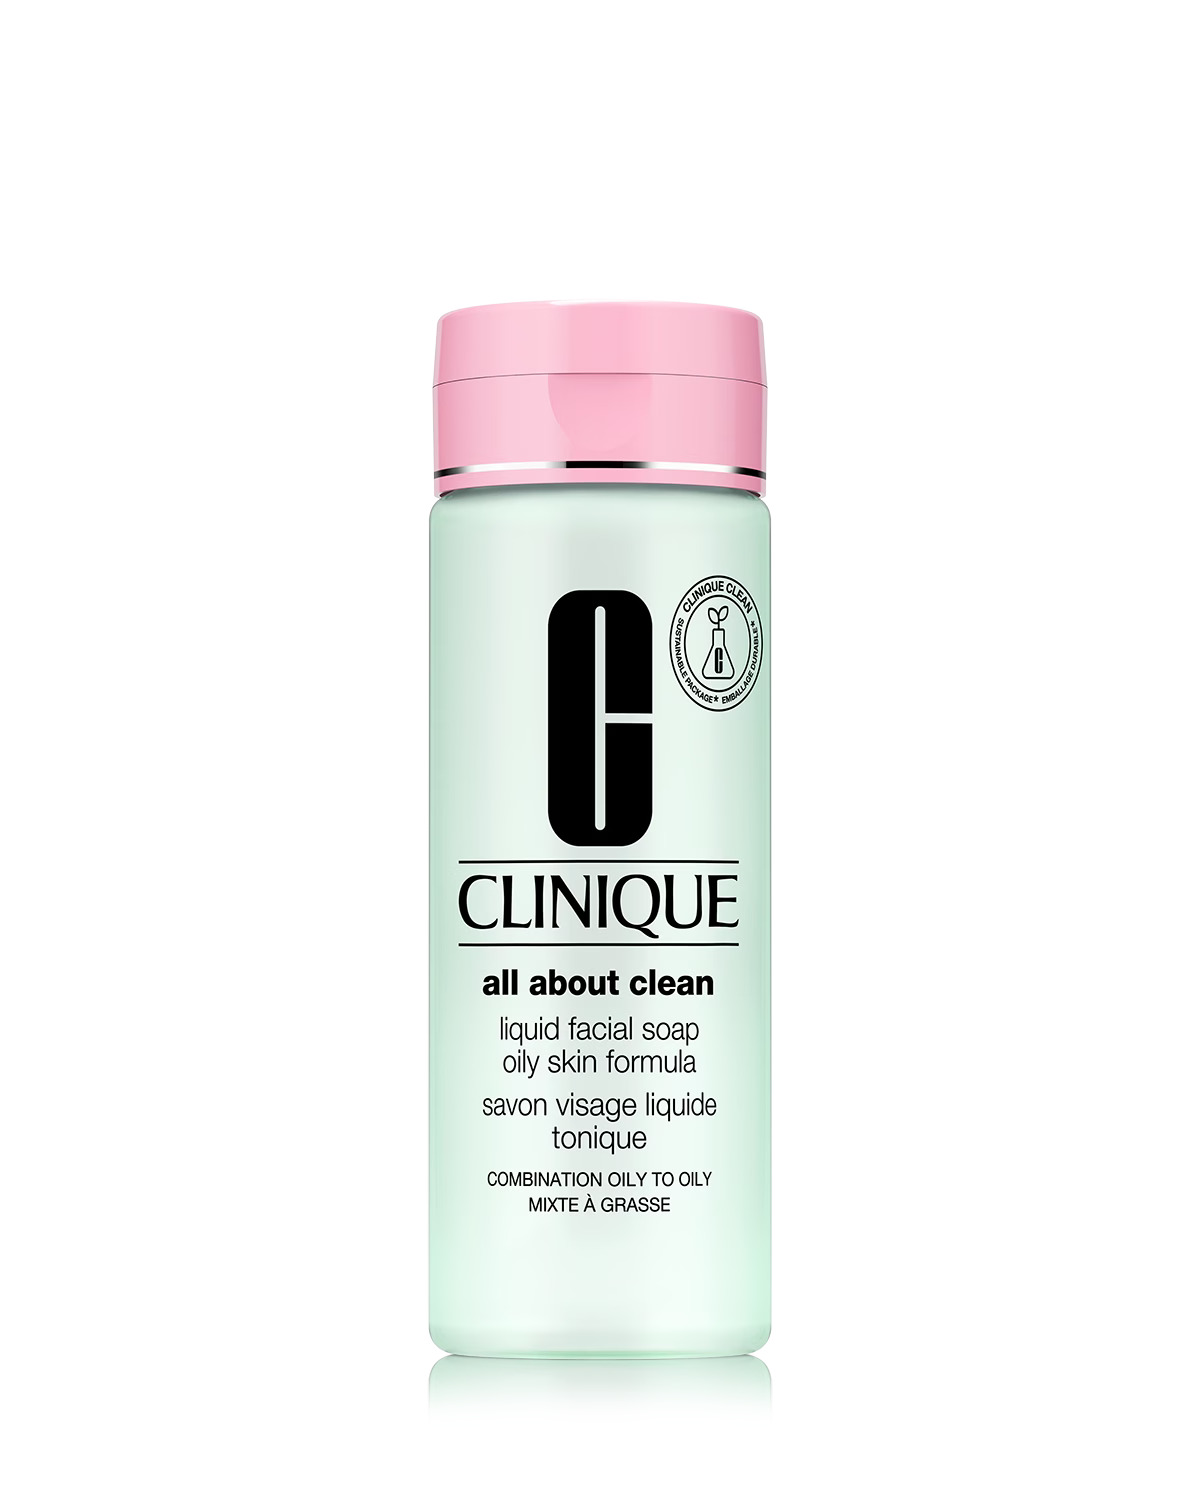 Clinique
All About Clean Liquid Facial Soap